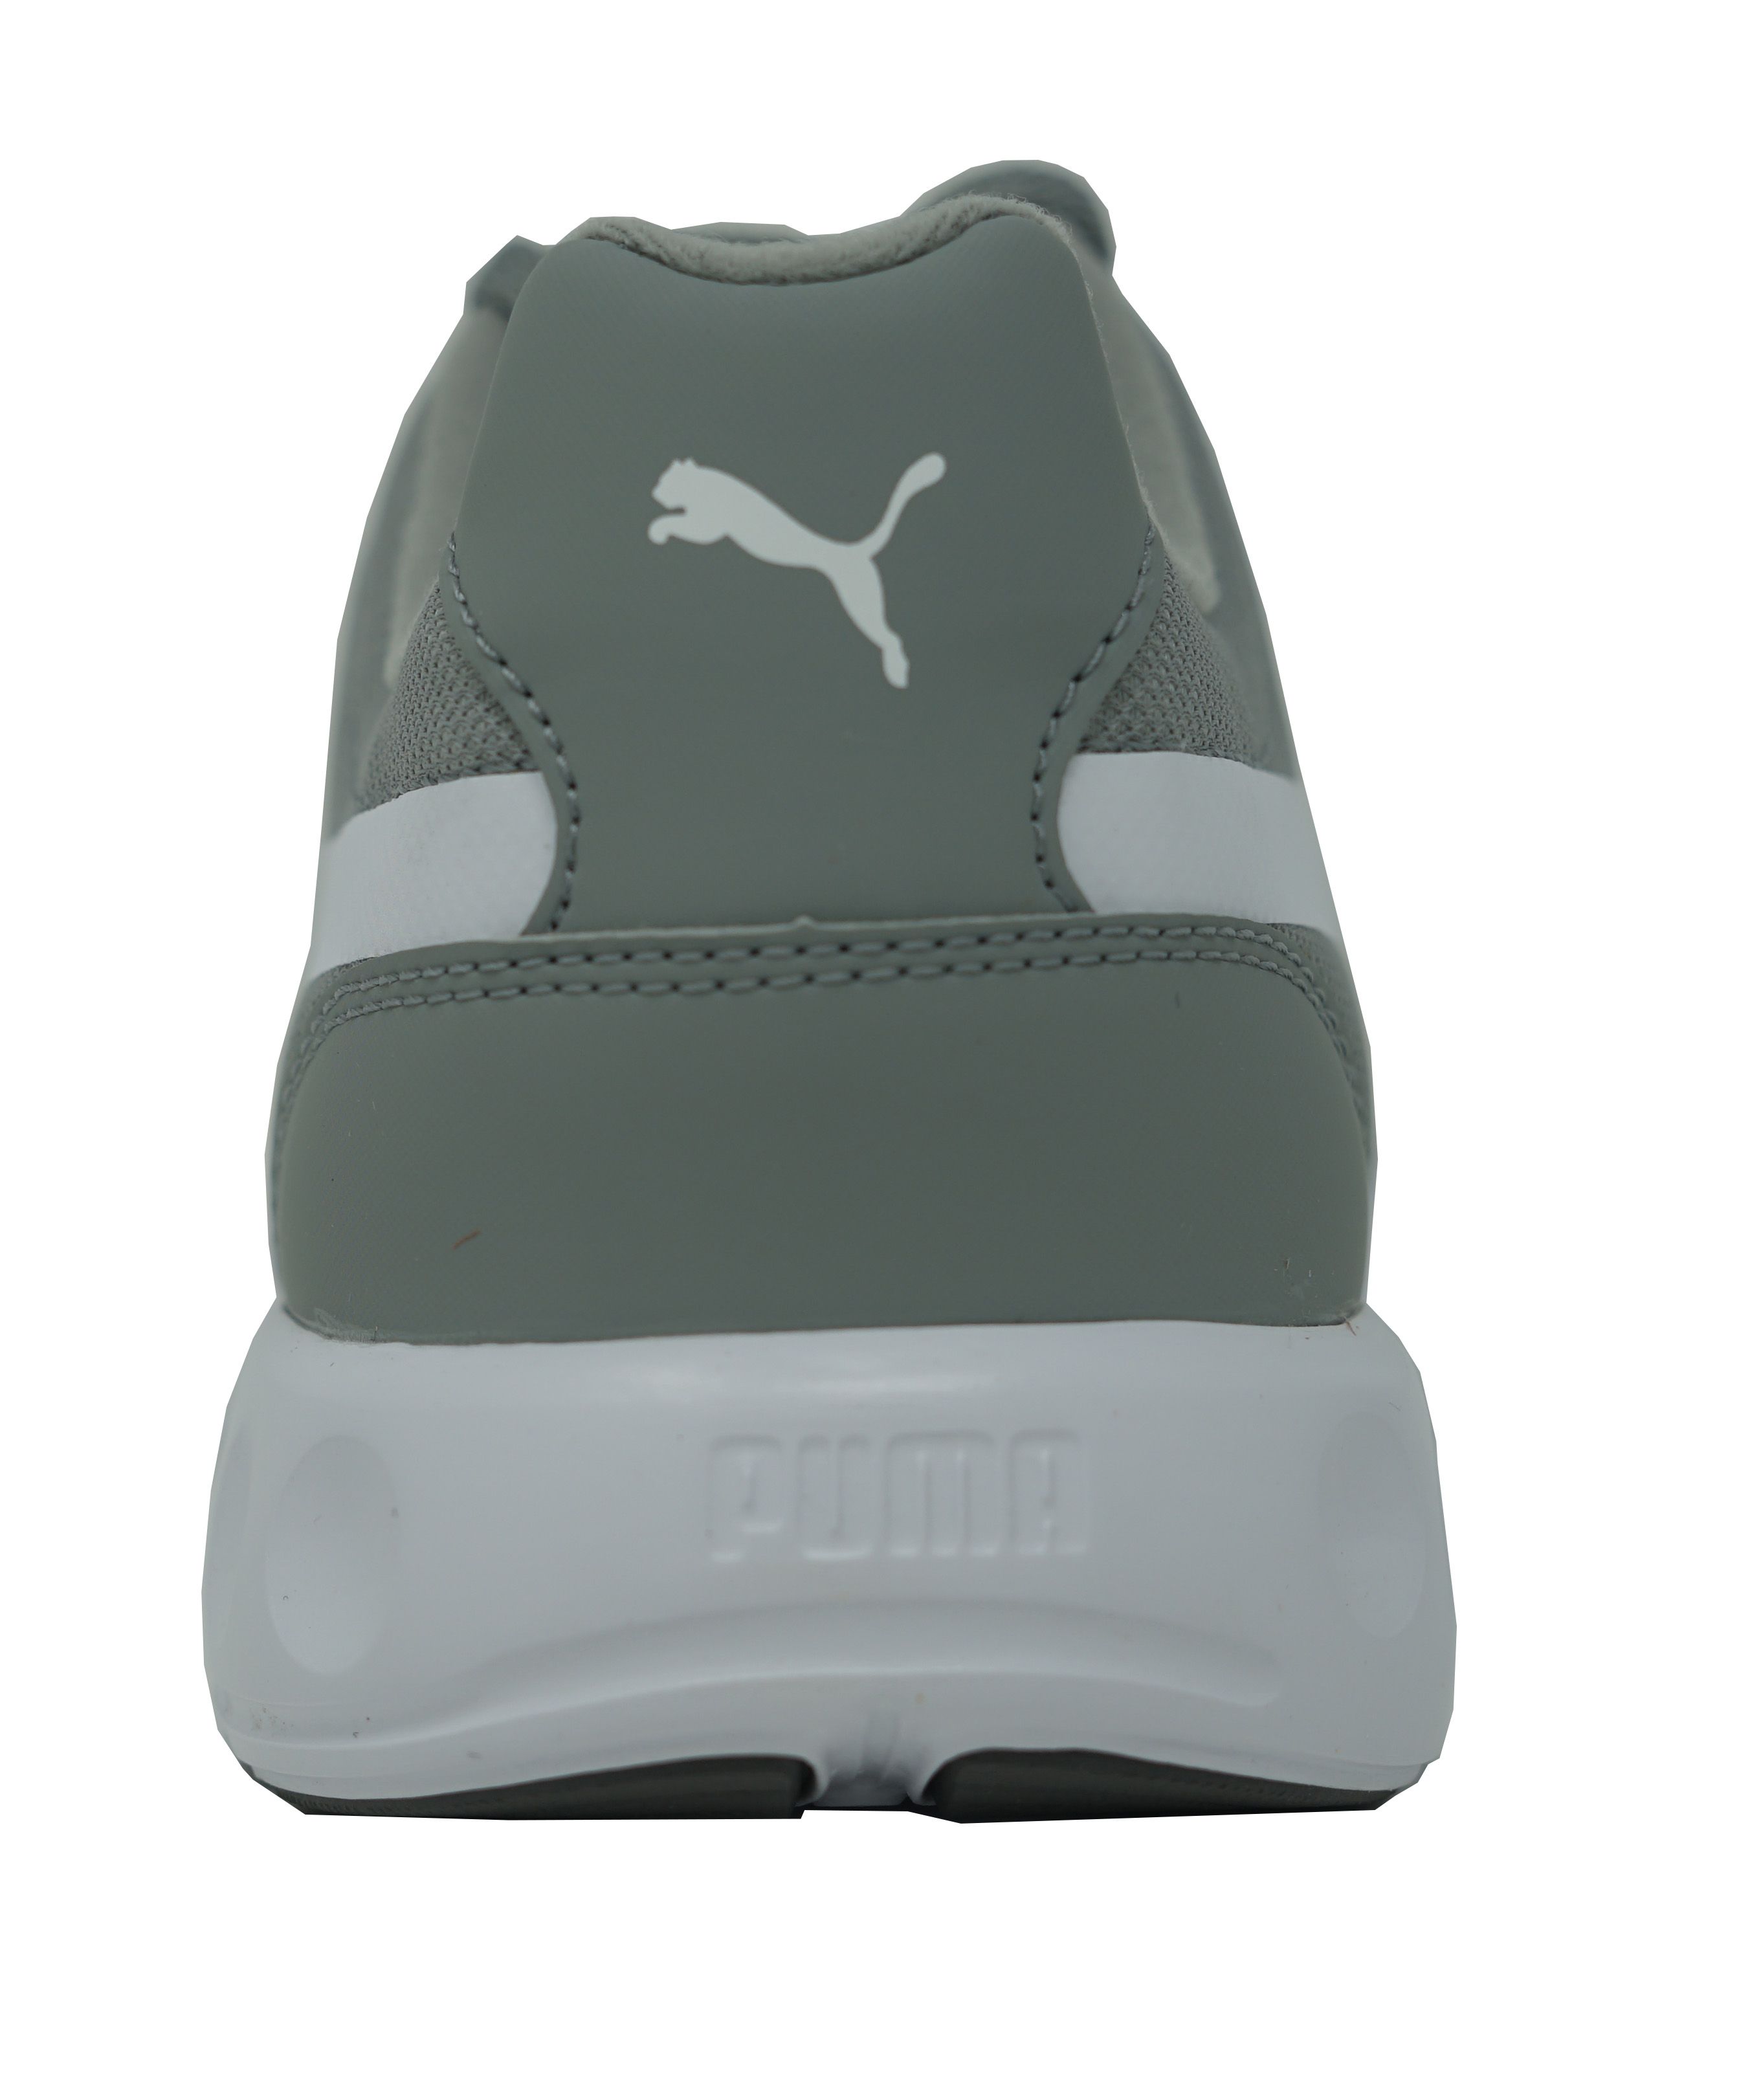 Puma FALLON 188274 02 Trainers. Running Trainers. 100% Nylon Upper Sneakers. Rubber Sole. Lace Fasten. IGNITE Foam Technology